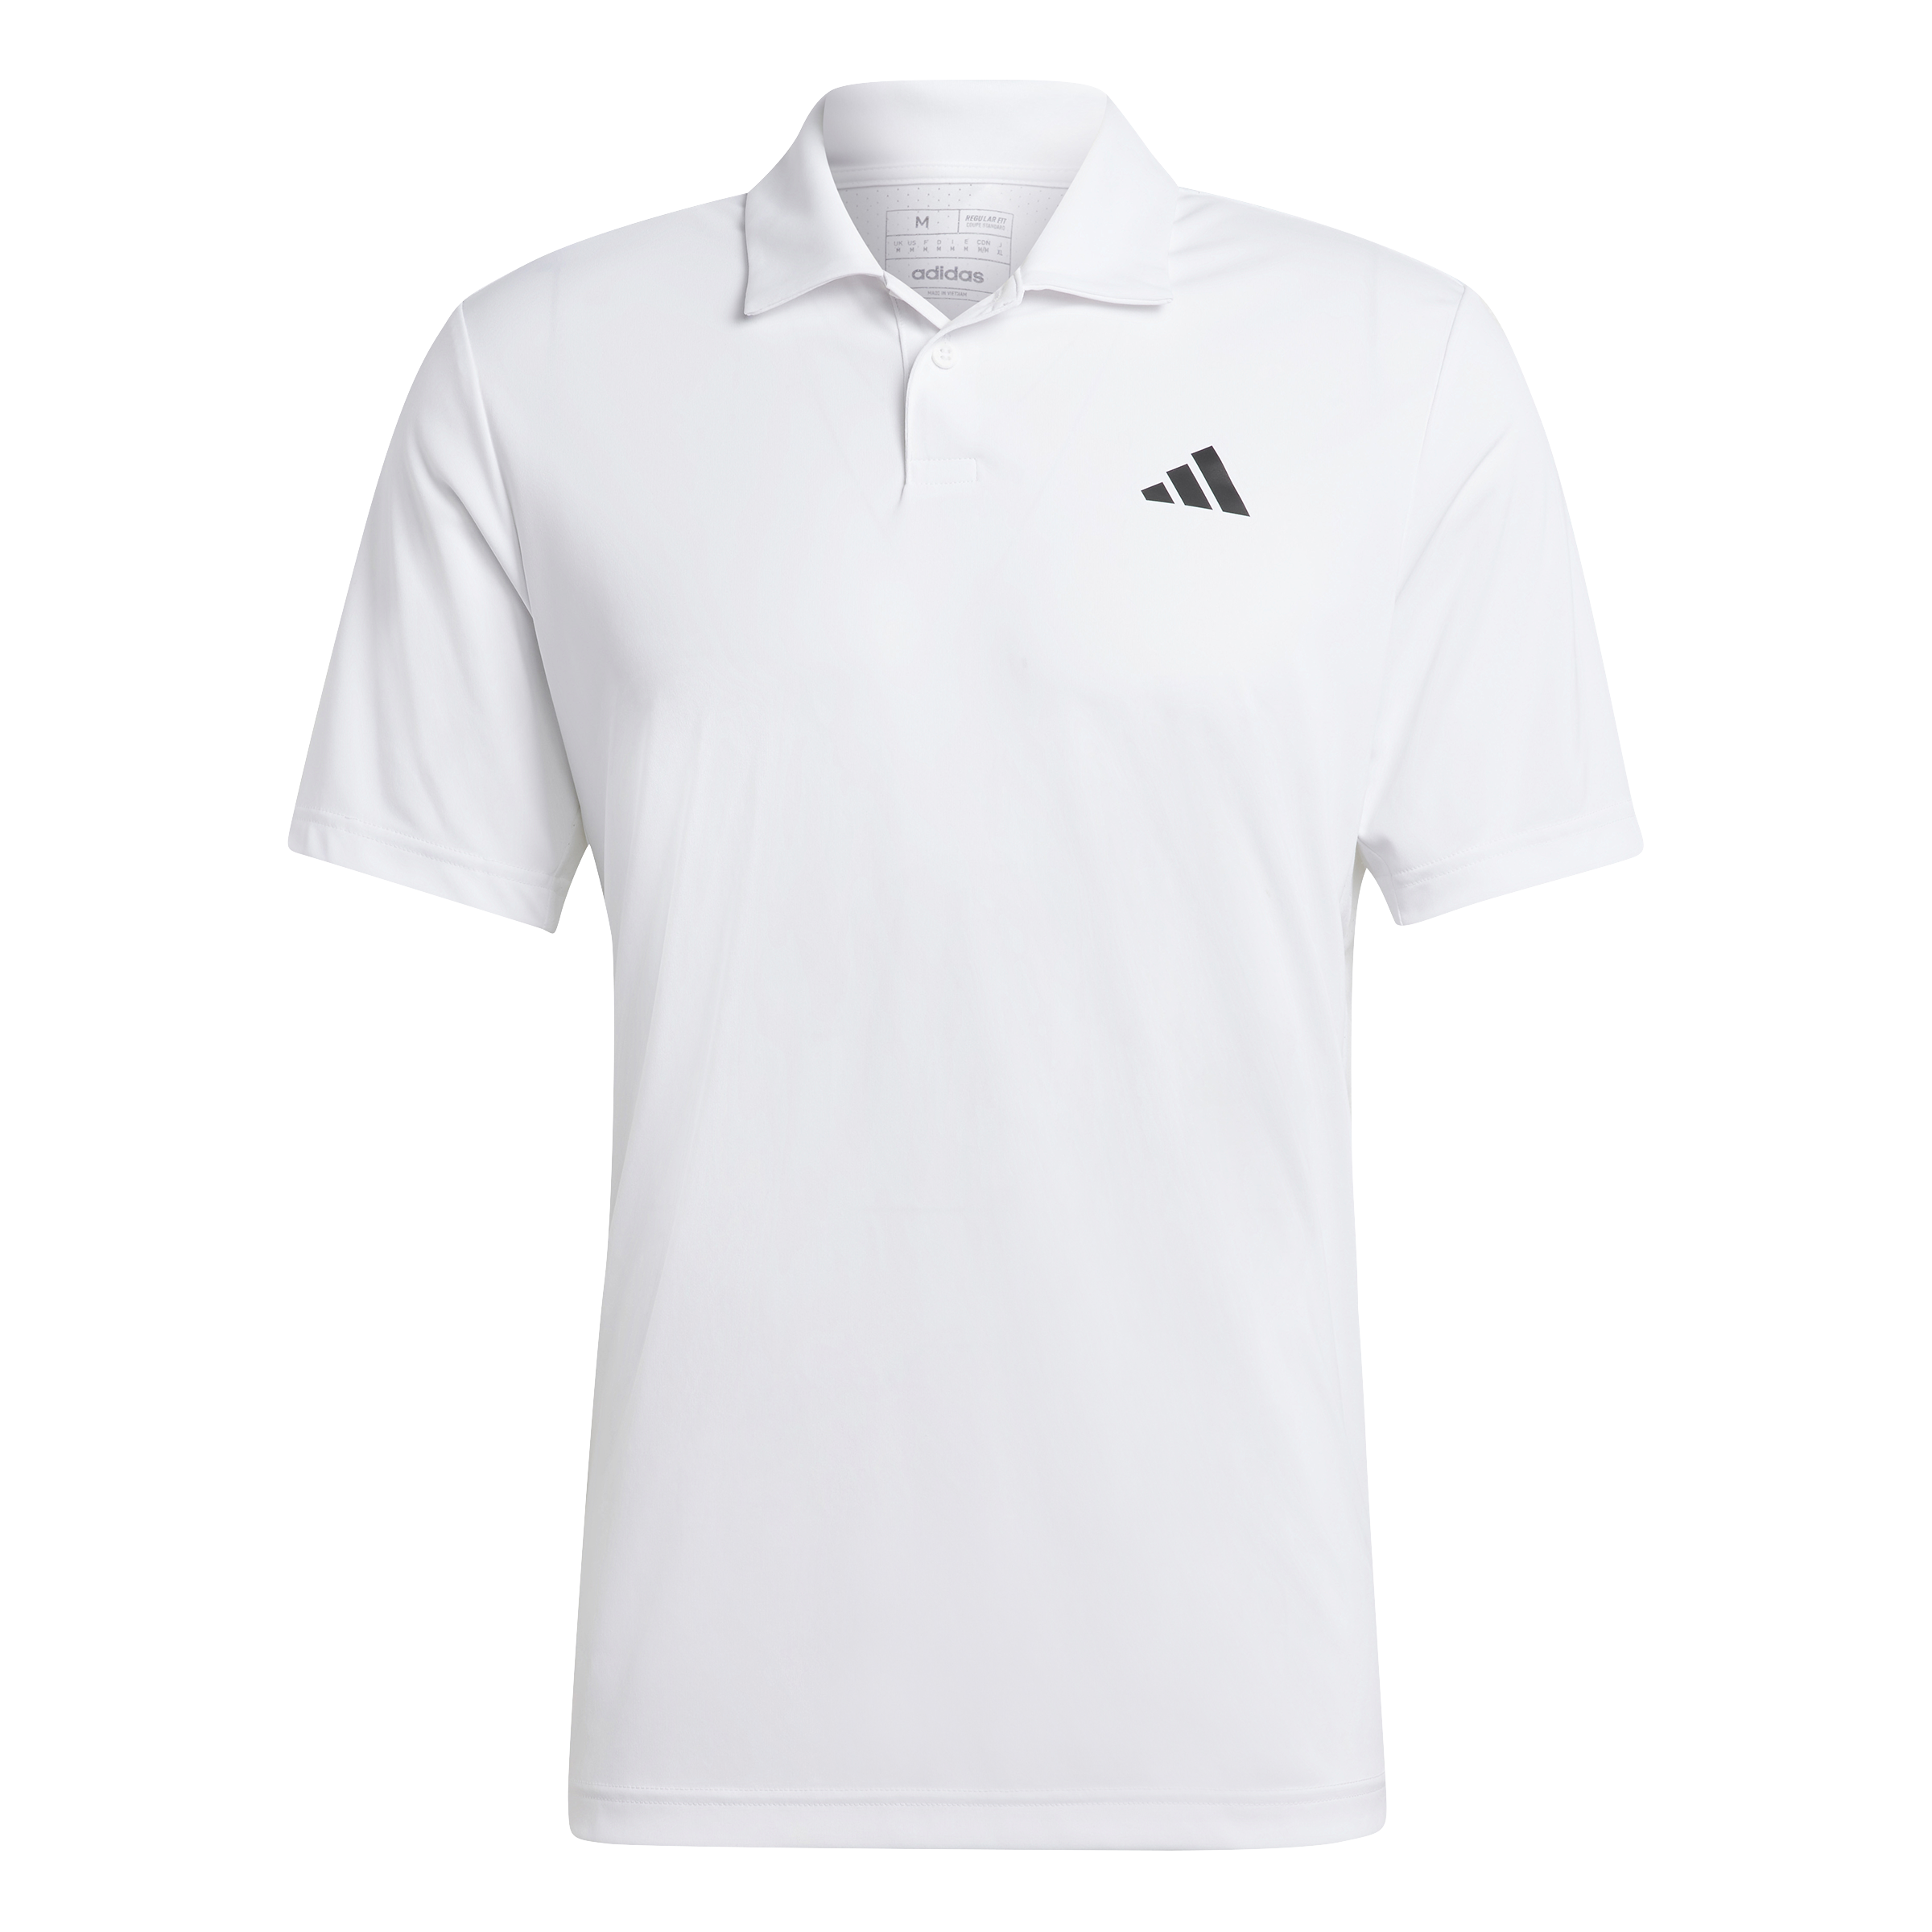 Adidas Club Polo Shirt (White) - S